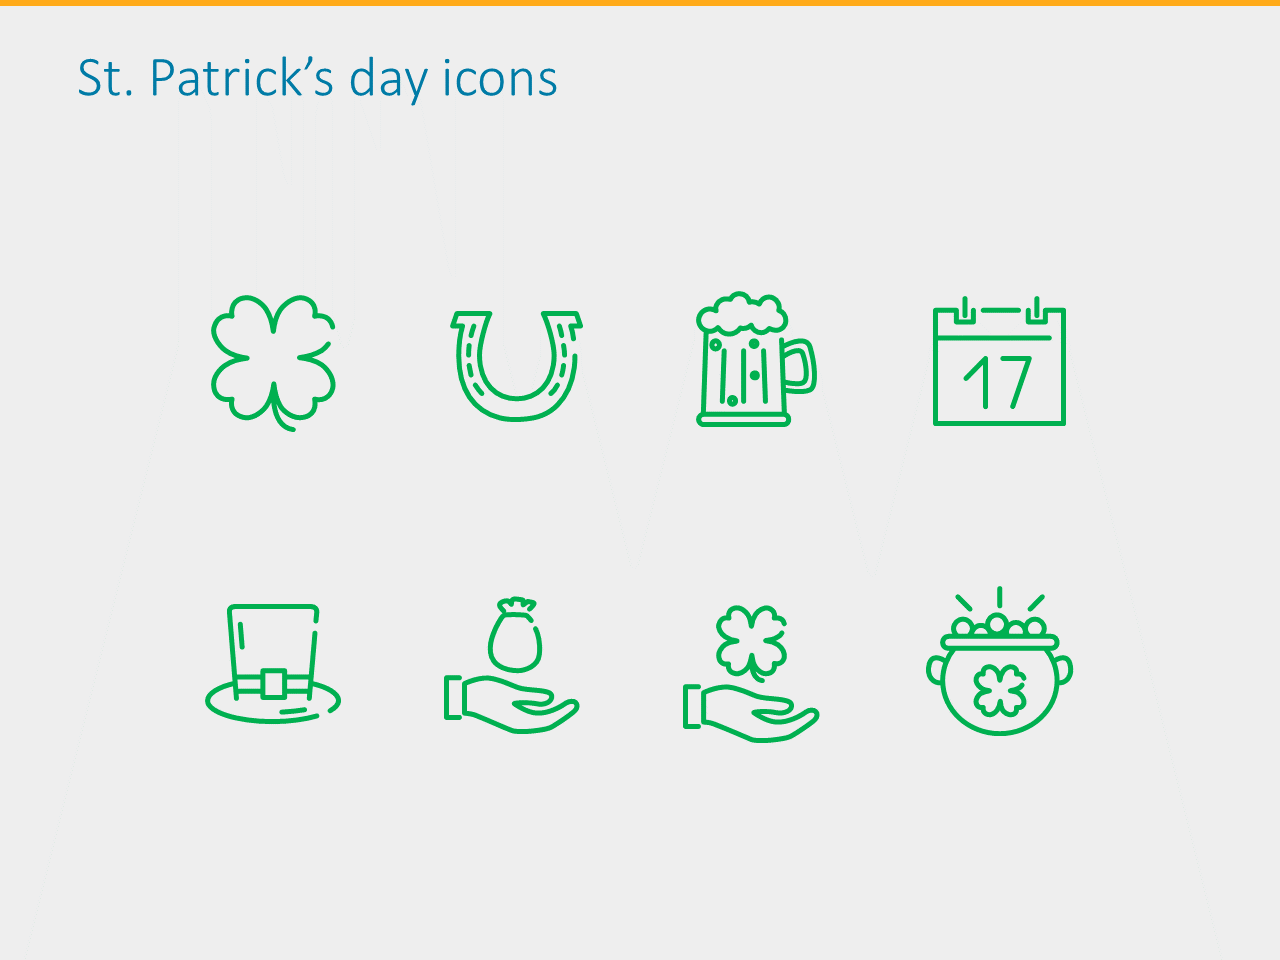 st-patrick-icons-ppt-hand-drawn